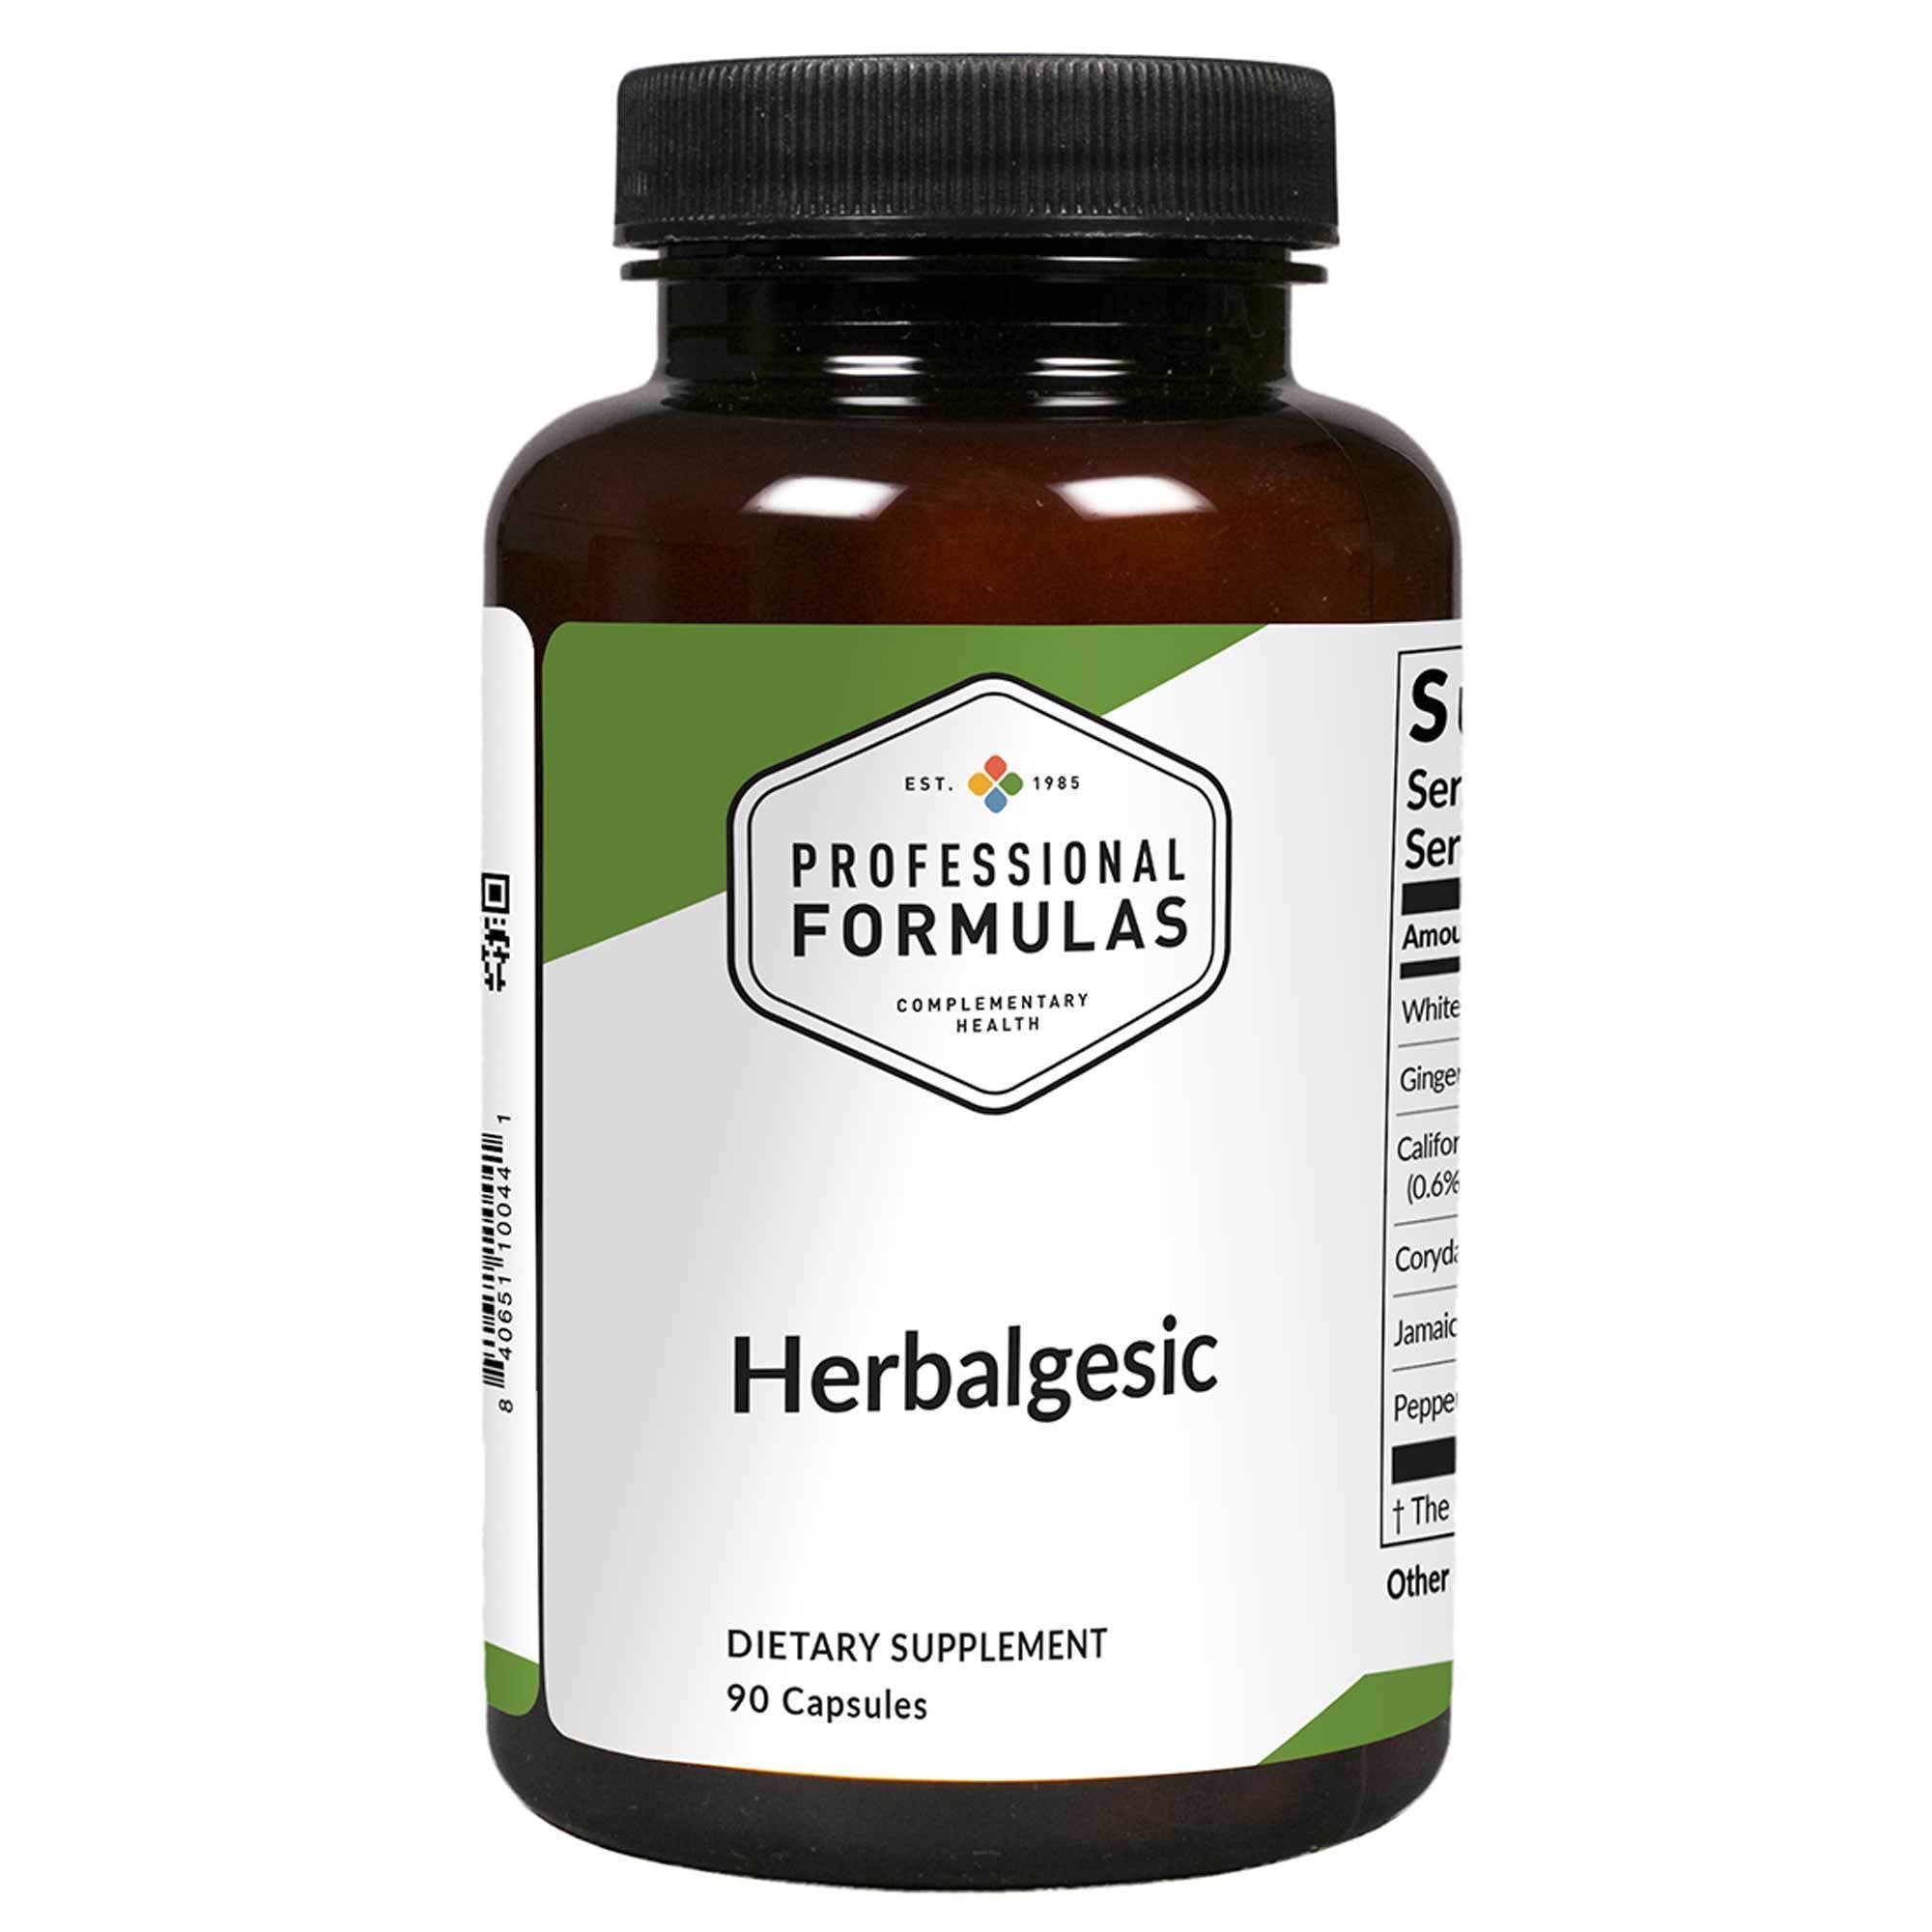 Professional Formulas Herbalgesic 90 Capsules - 2 Pack